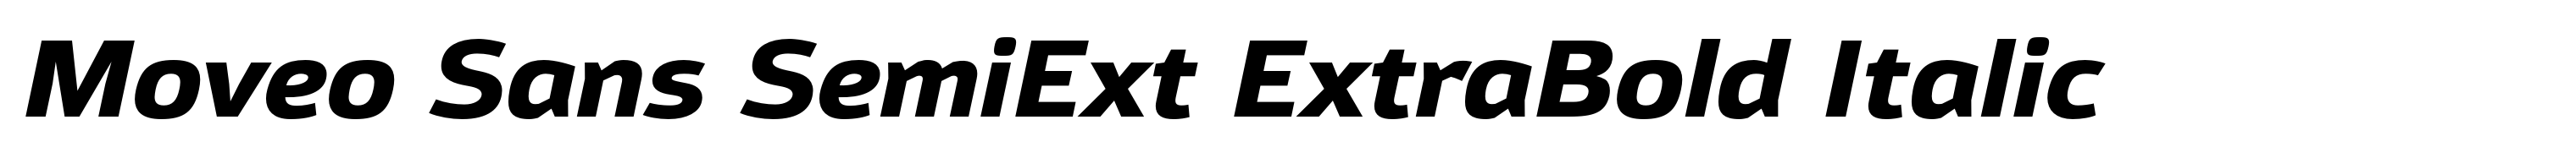 Moveo Sans SemiExt ExtraBold Italic